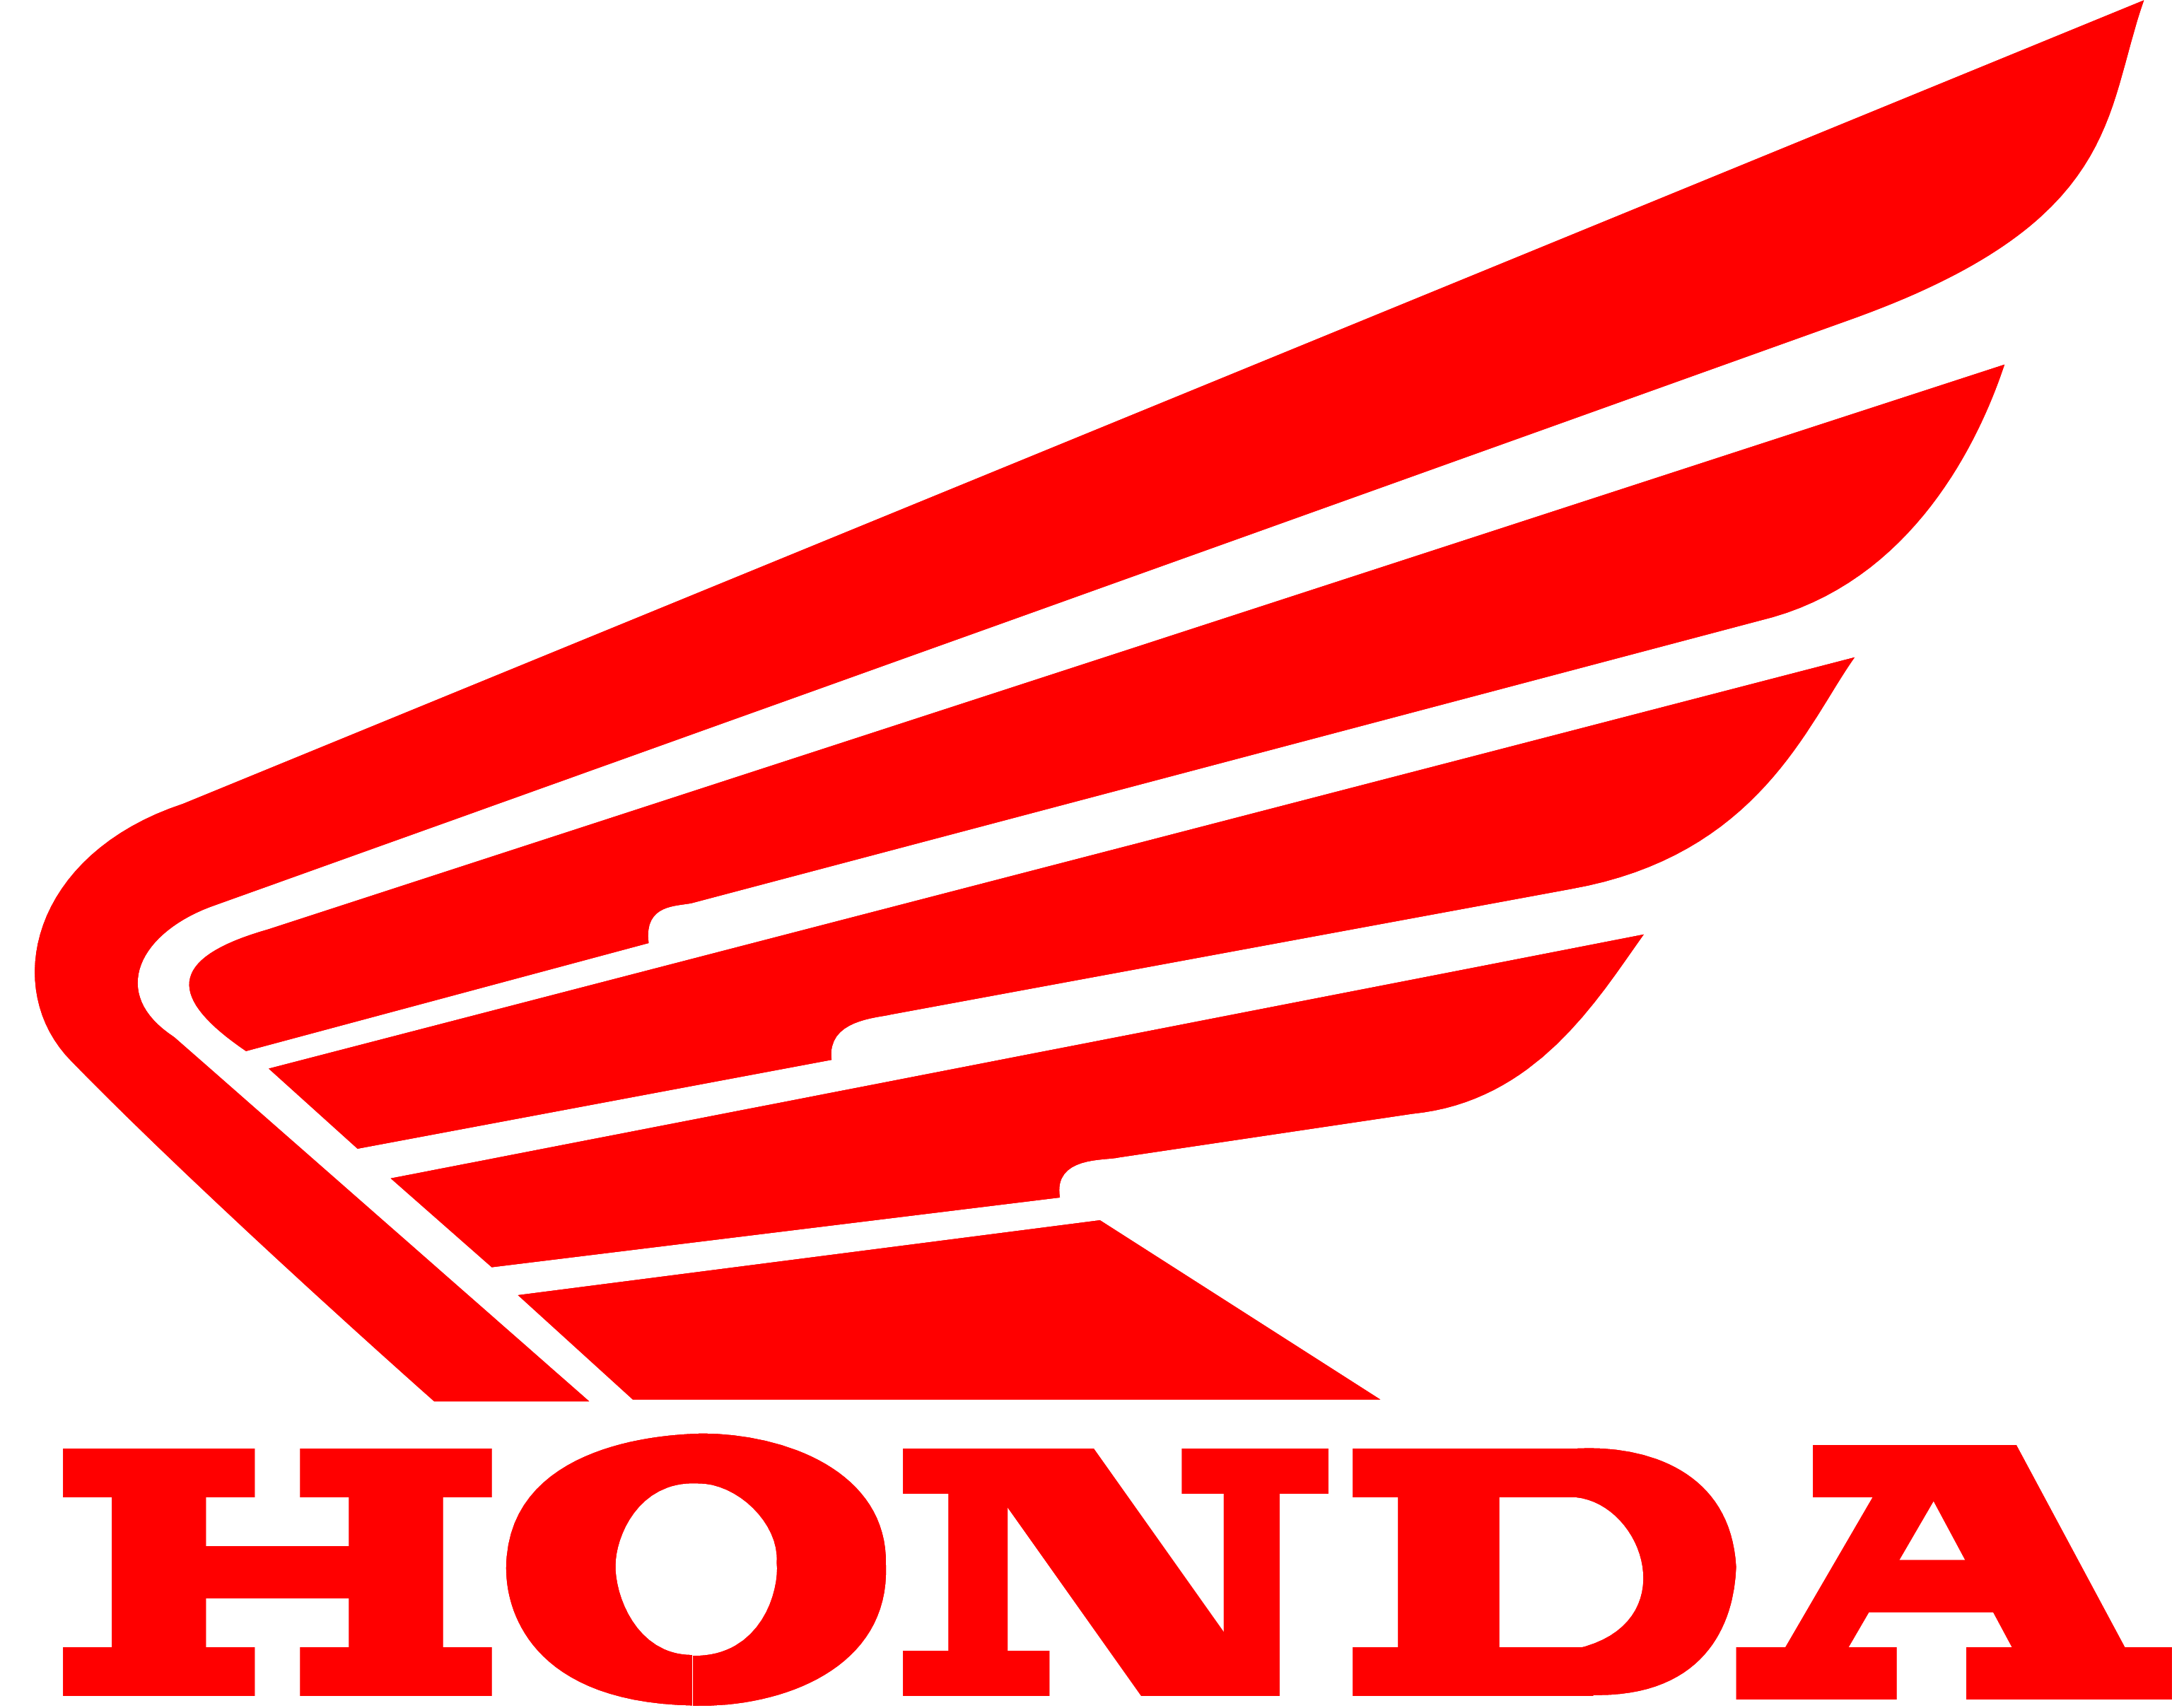 Honda Motorcycle Logo Wallpapers Wallpaper Cave